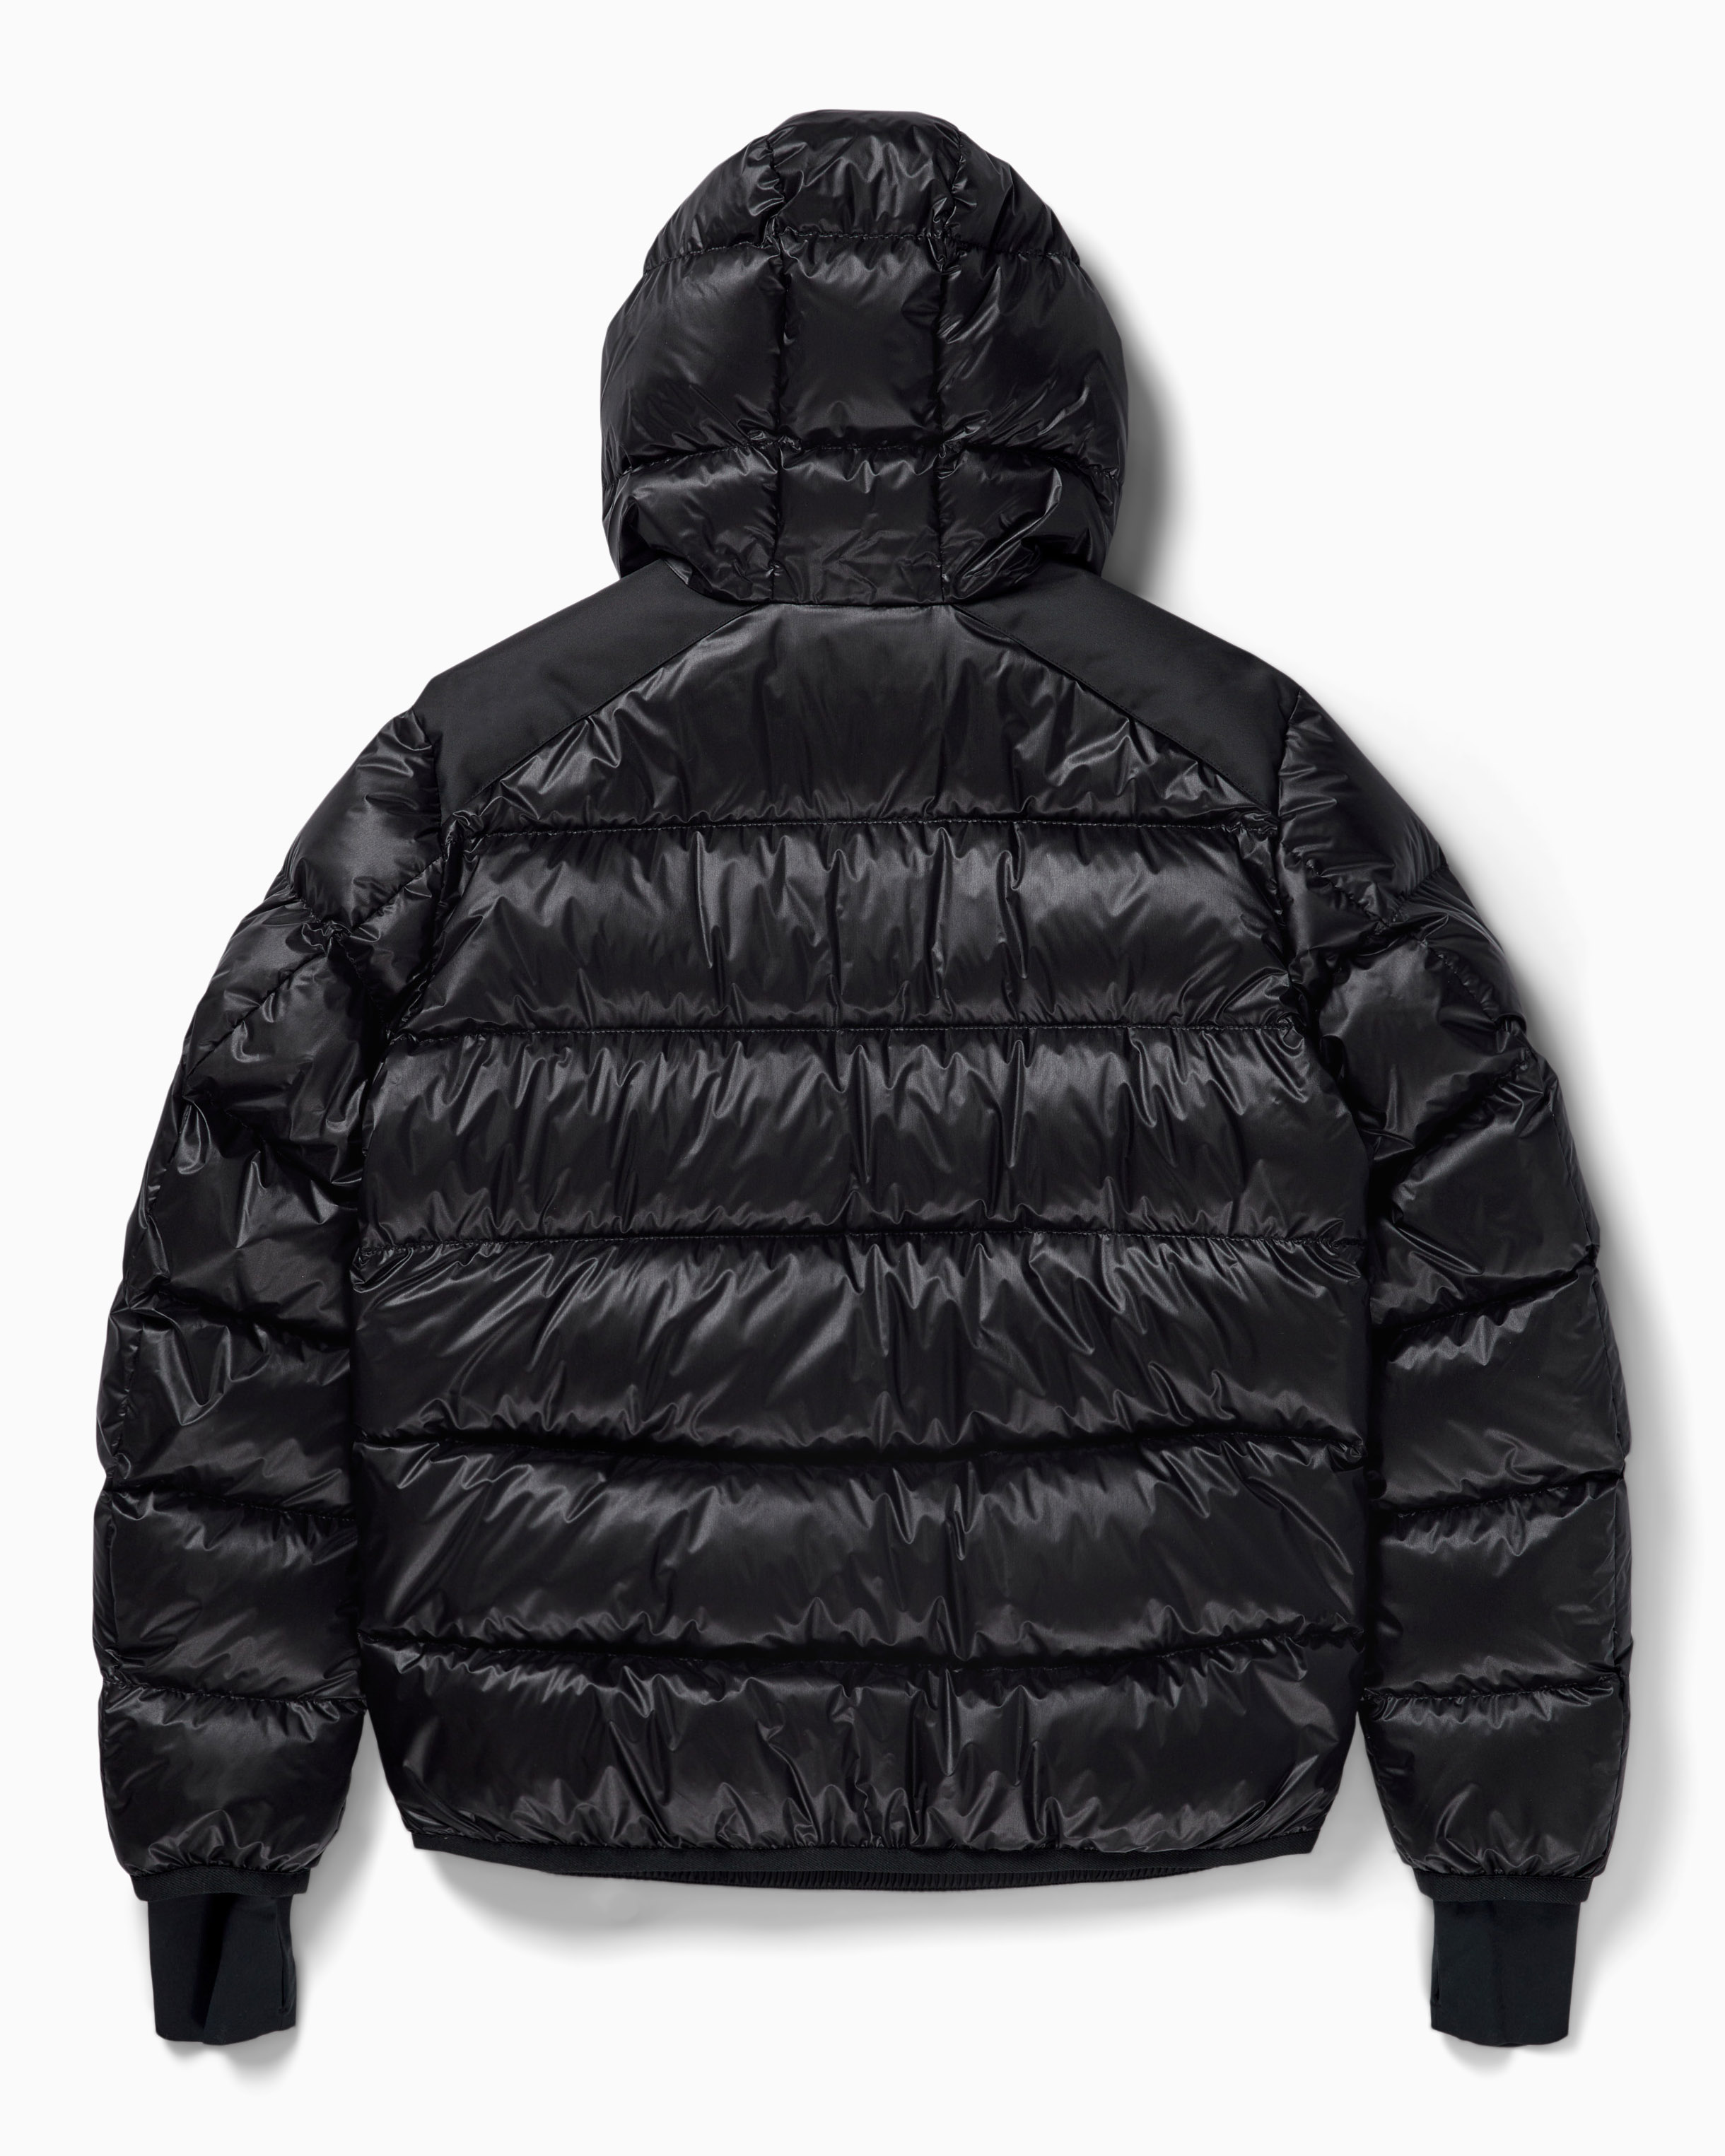 Hintertux Jacket Moncler Grenoble Outerwear Down Jackets Black